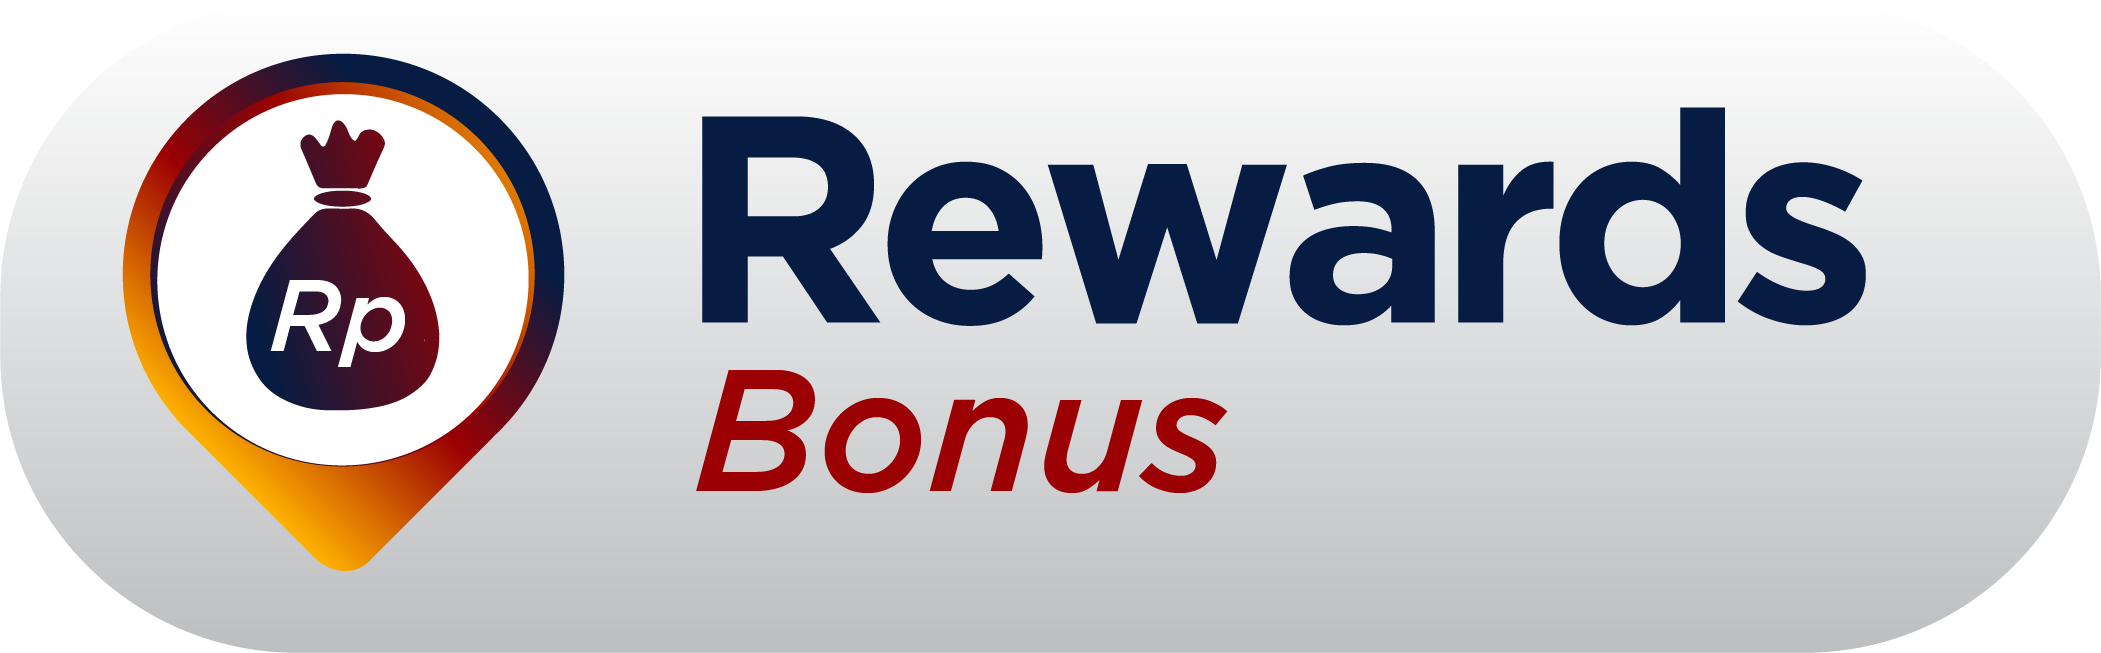 REWARDS Bonus